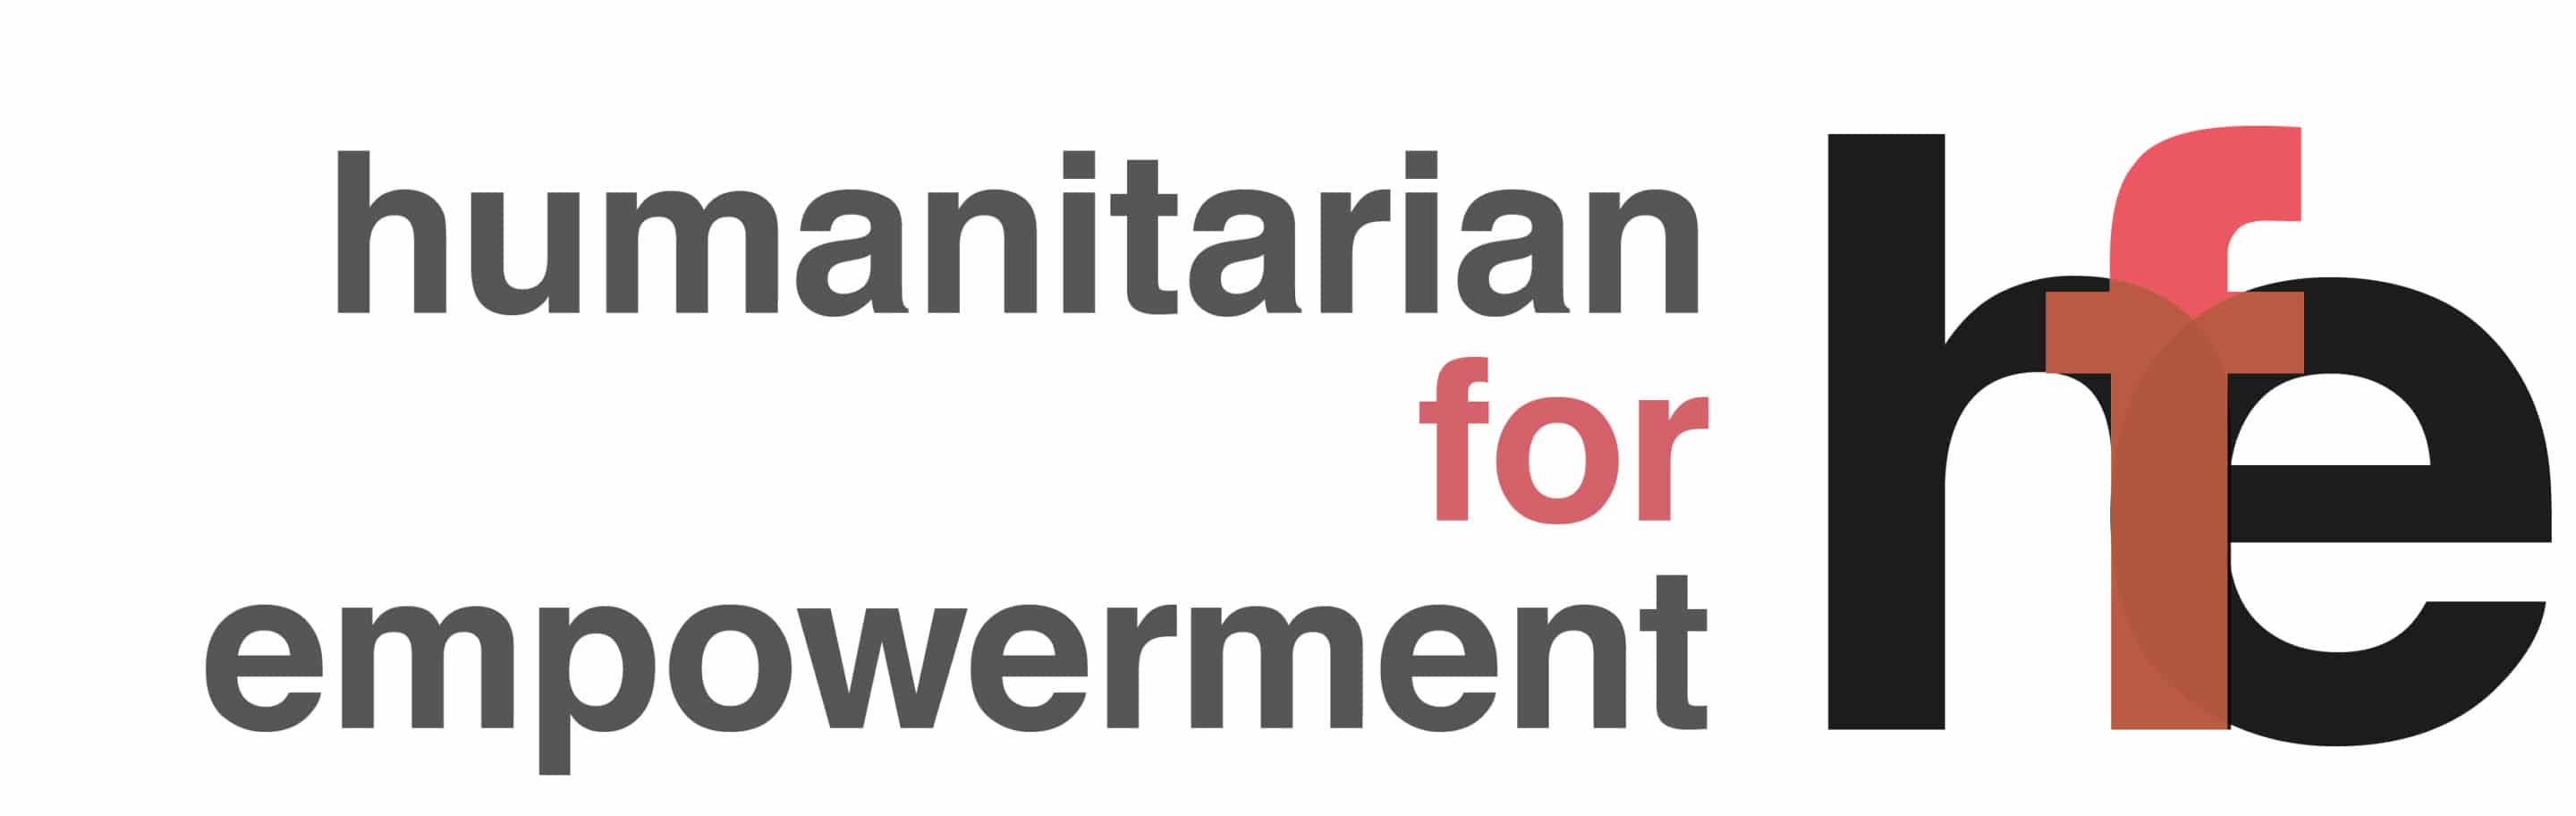 Humanitarian for Empowerment